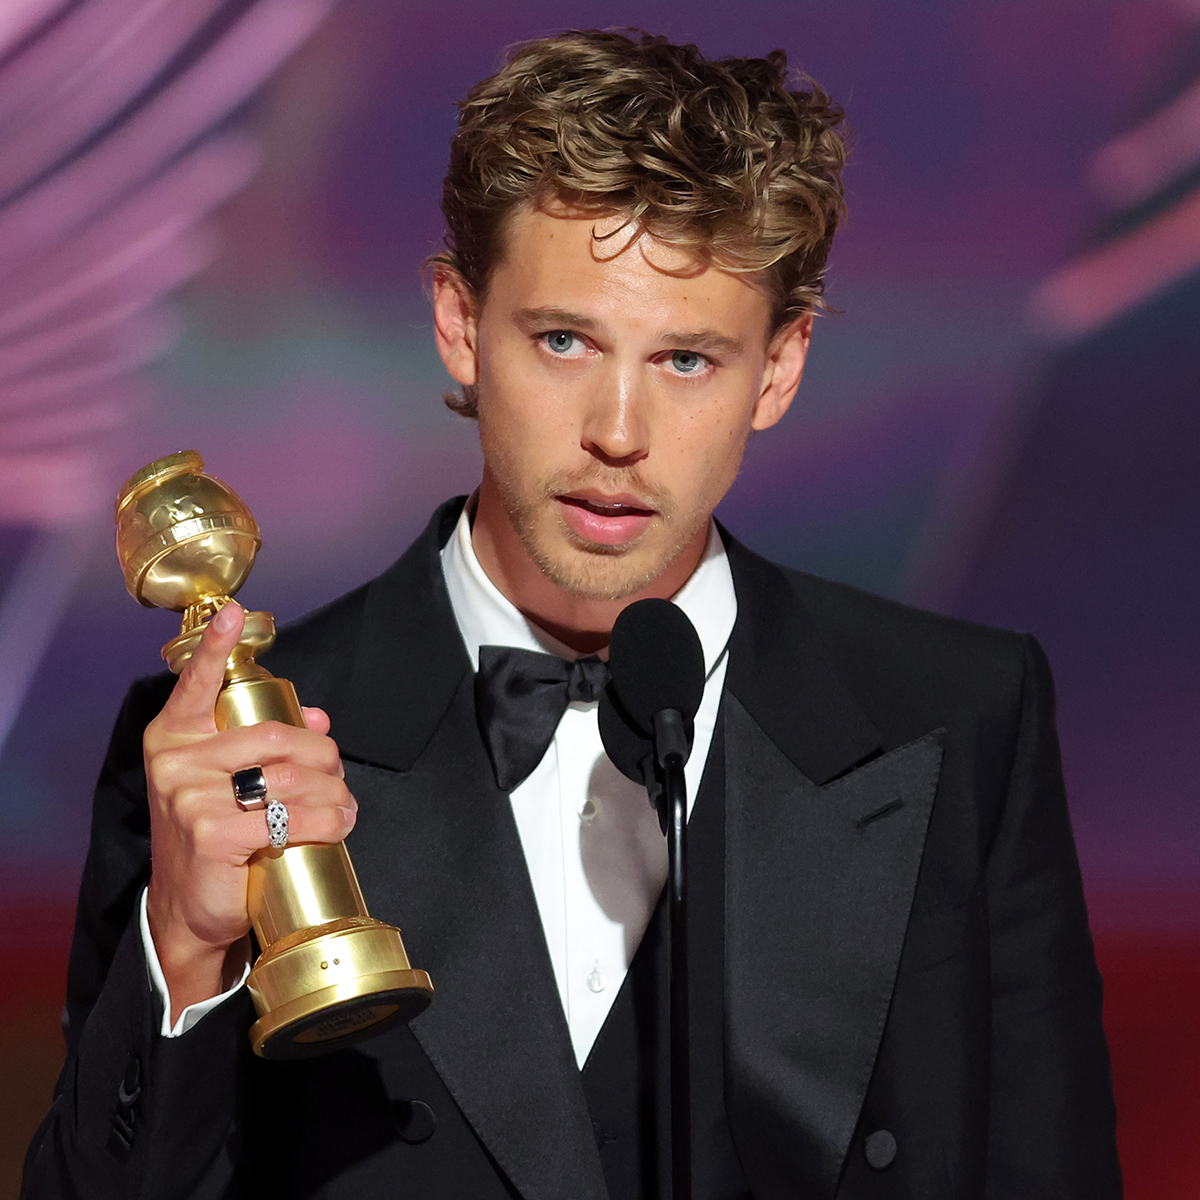 Golden Globe Awards 2023 Winners: The Complete List